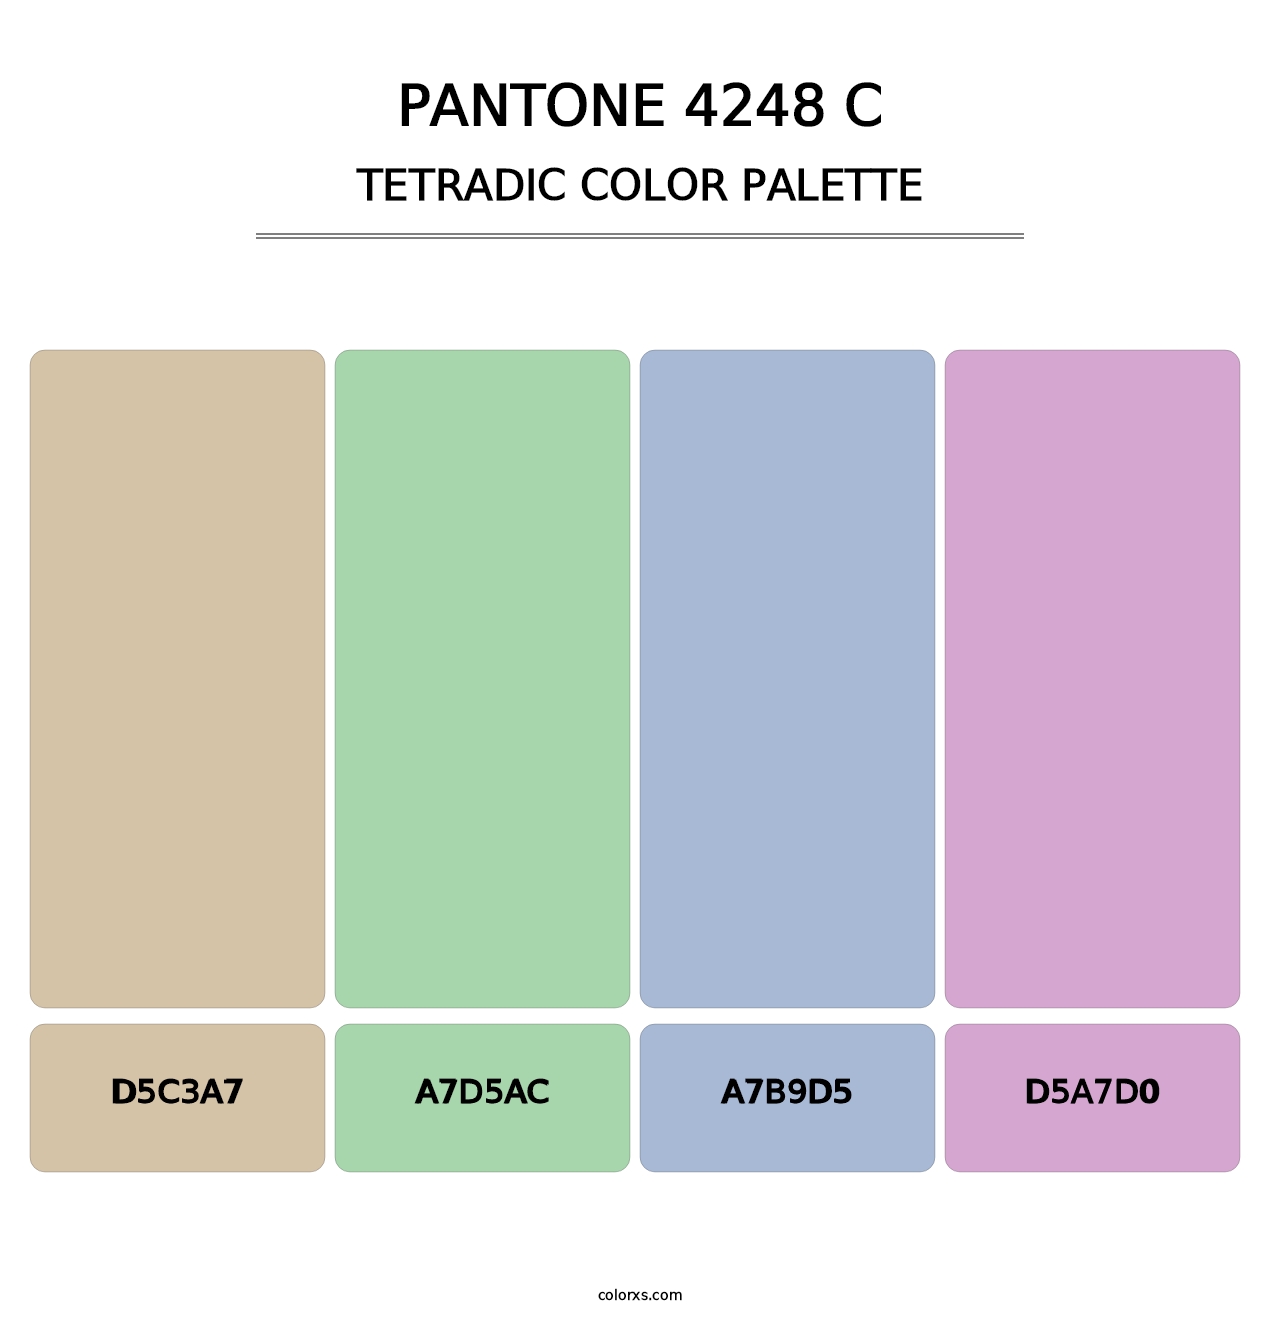 PANTONE 4248 C - Tetradic Color Palette